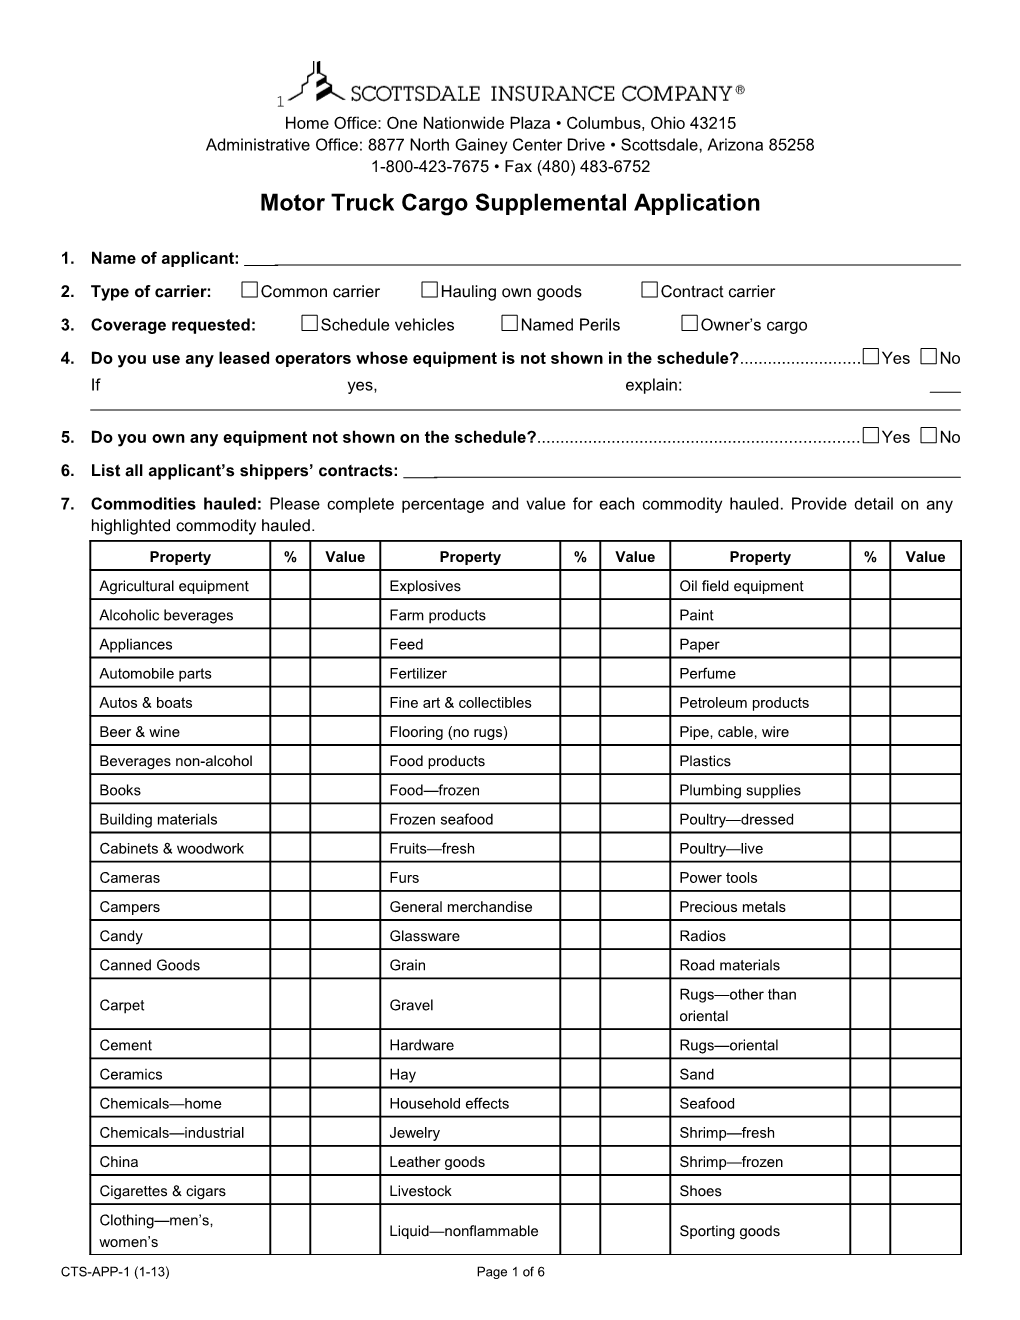 Motor Truck Cargo Supplemental Application